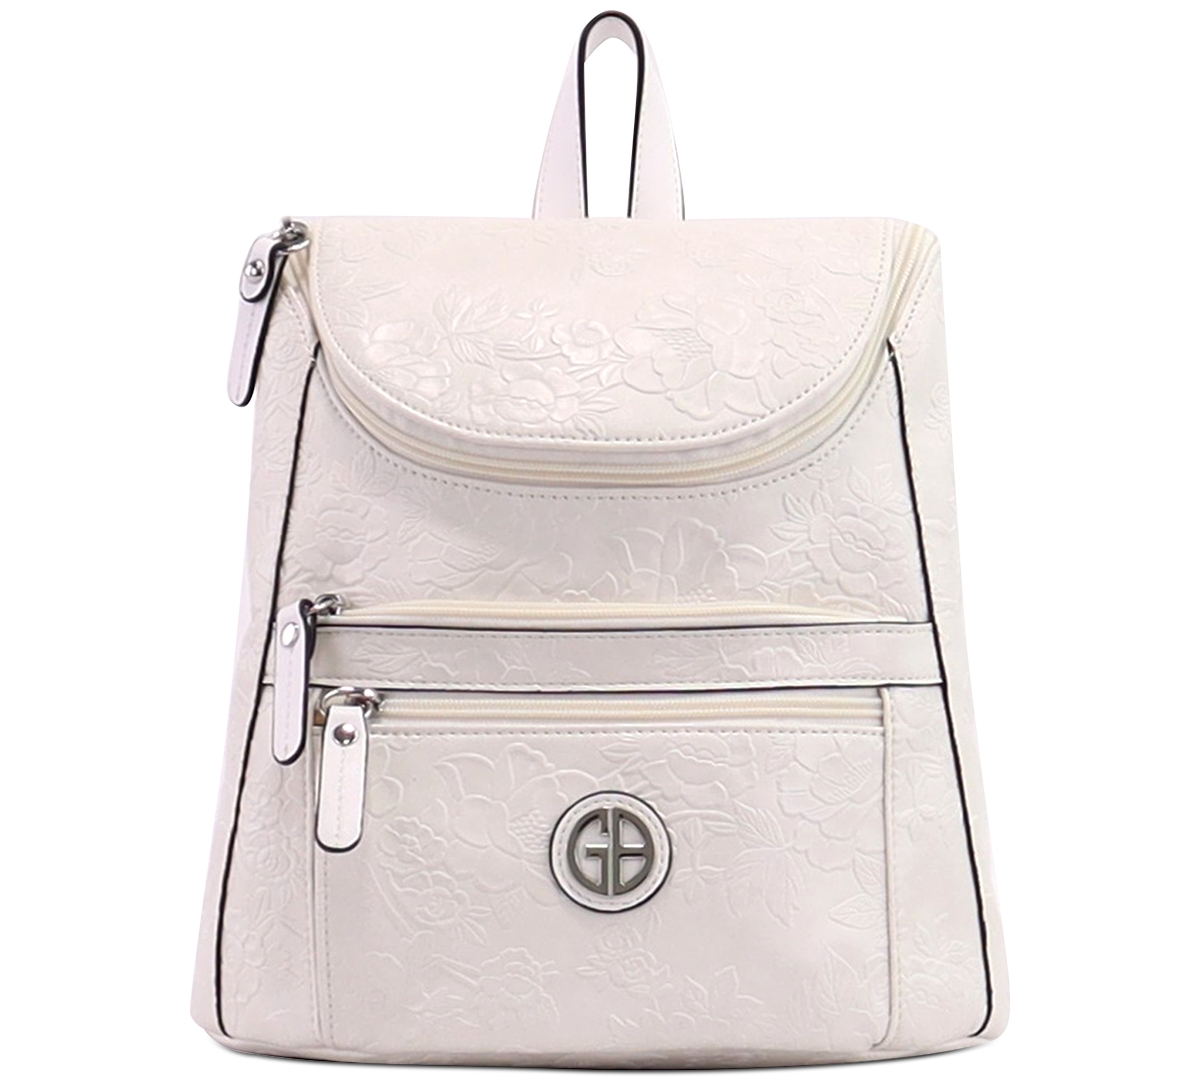 Giani Bernini Pebble Backpack, Created For Macy's In Ivory